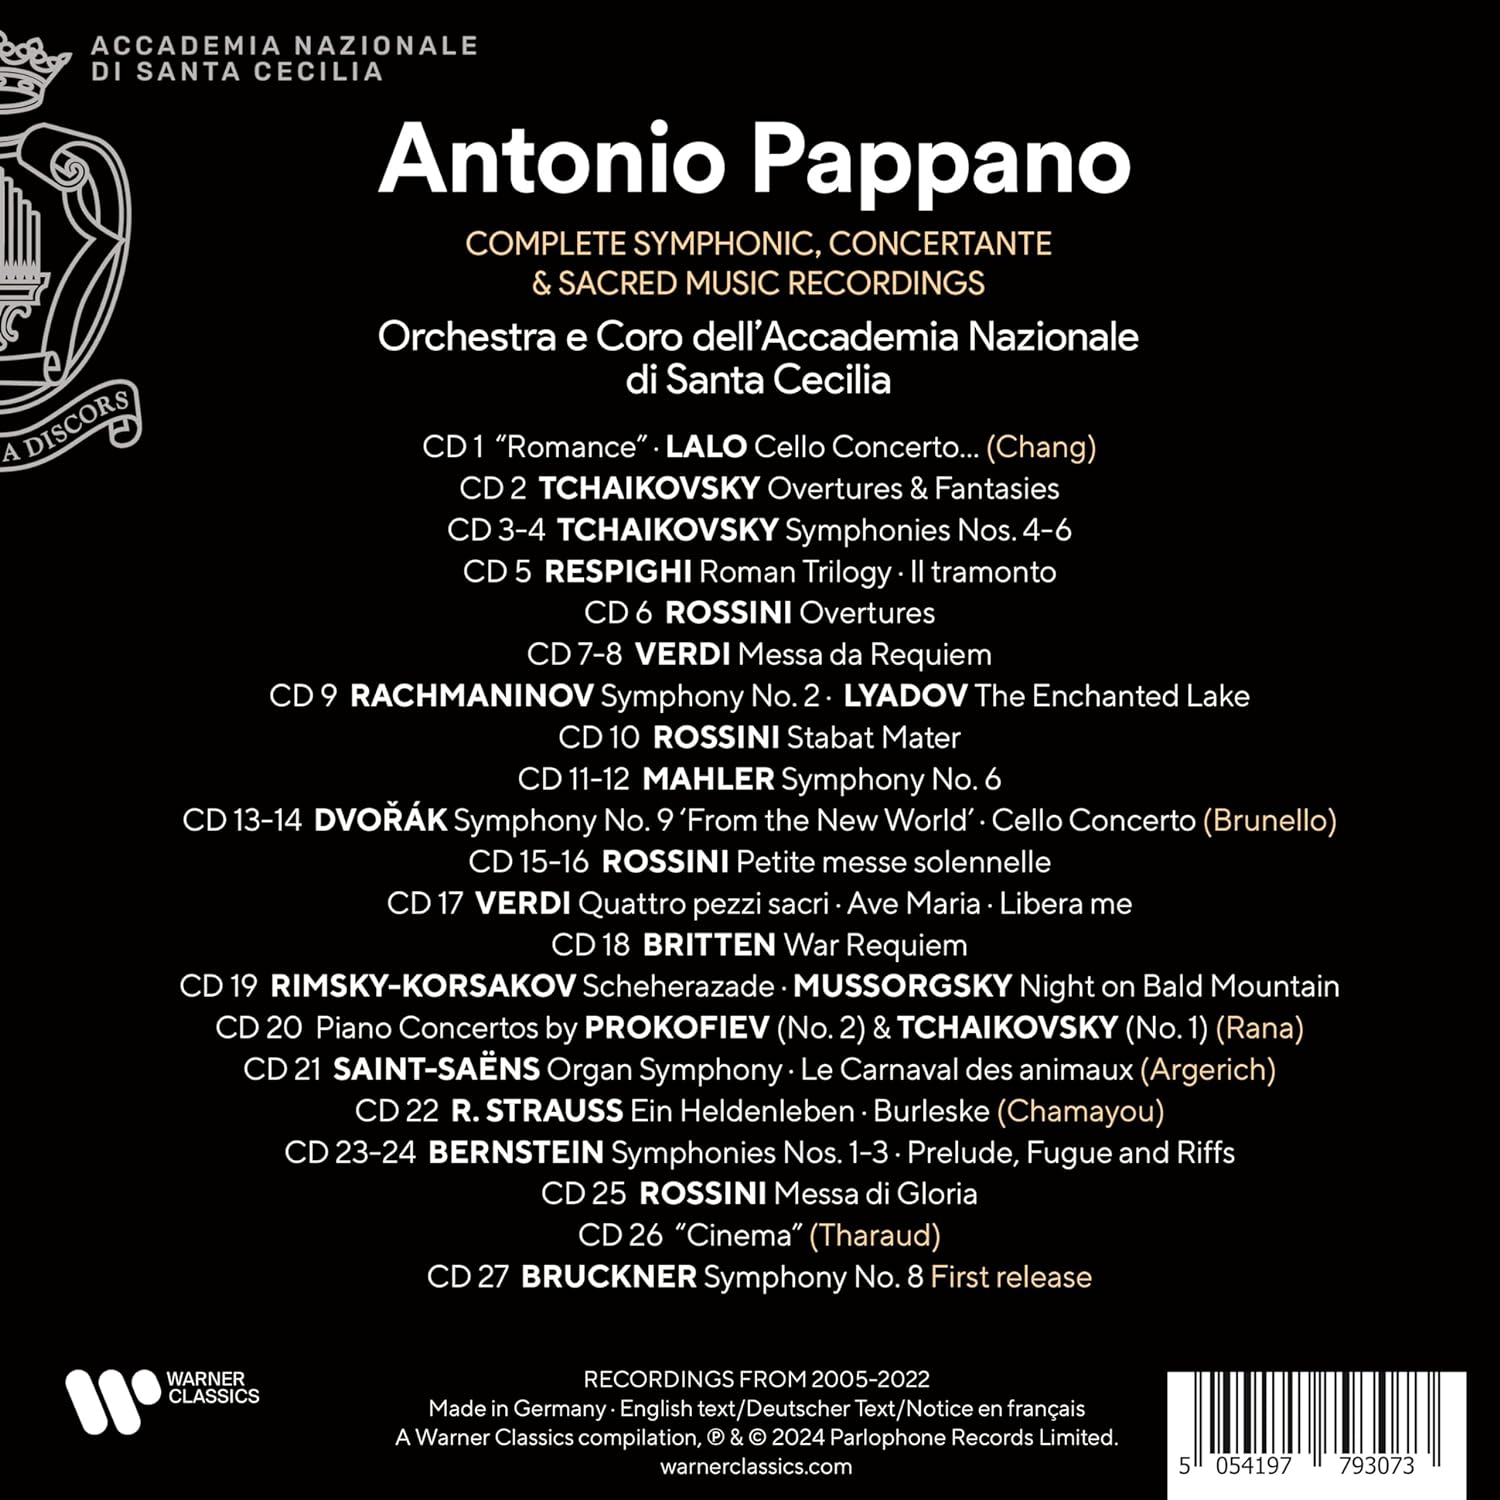 PAPPANO ANTONIO – COMPLETE SYMPHONIC, CONCERTANTE & SACRED MUSIC RECORDINGS CD27